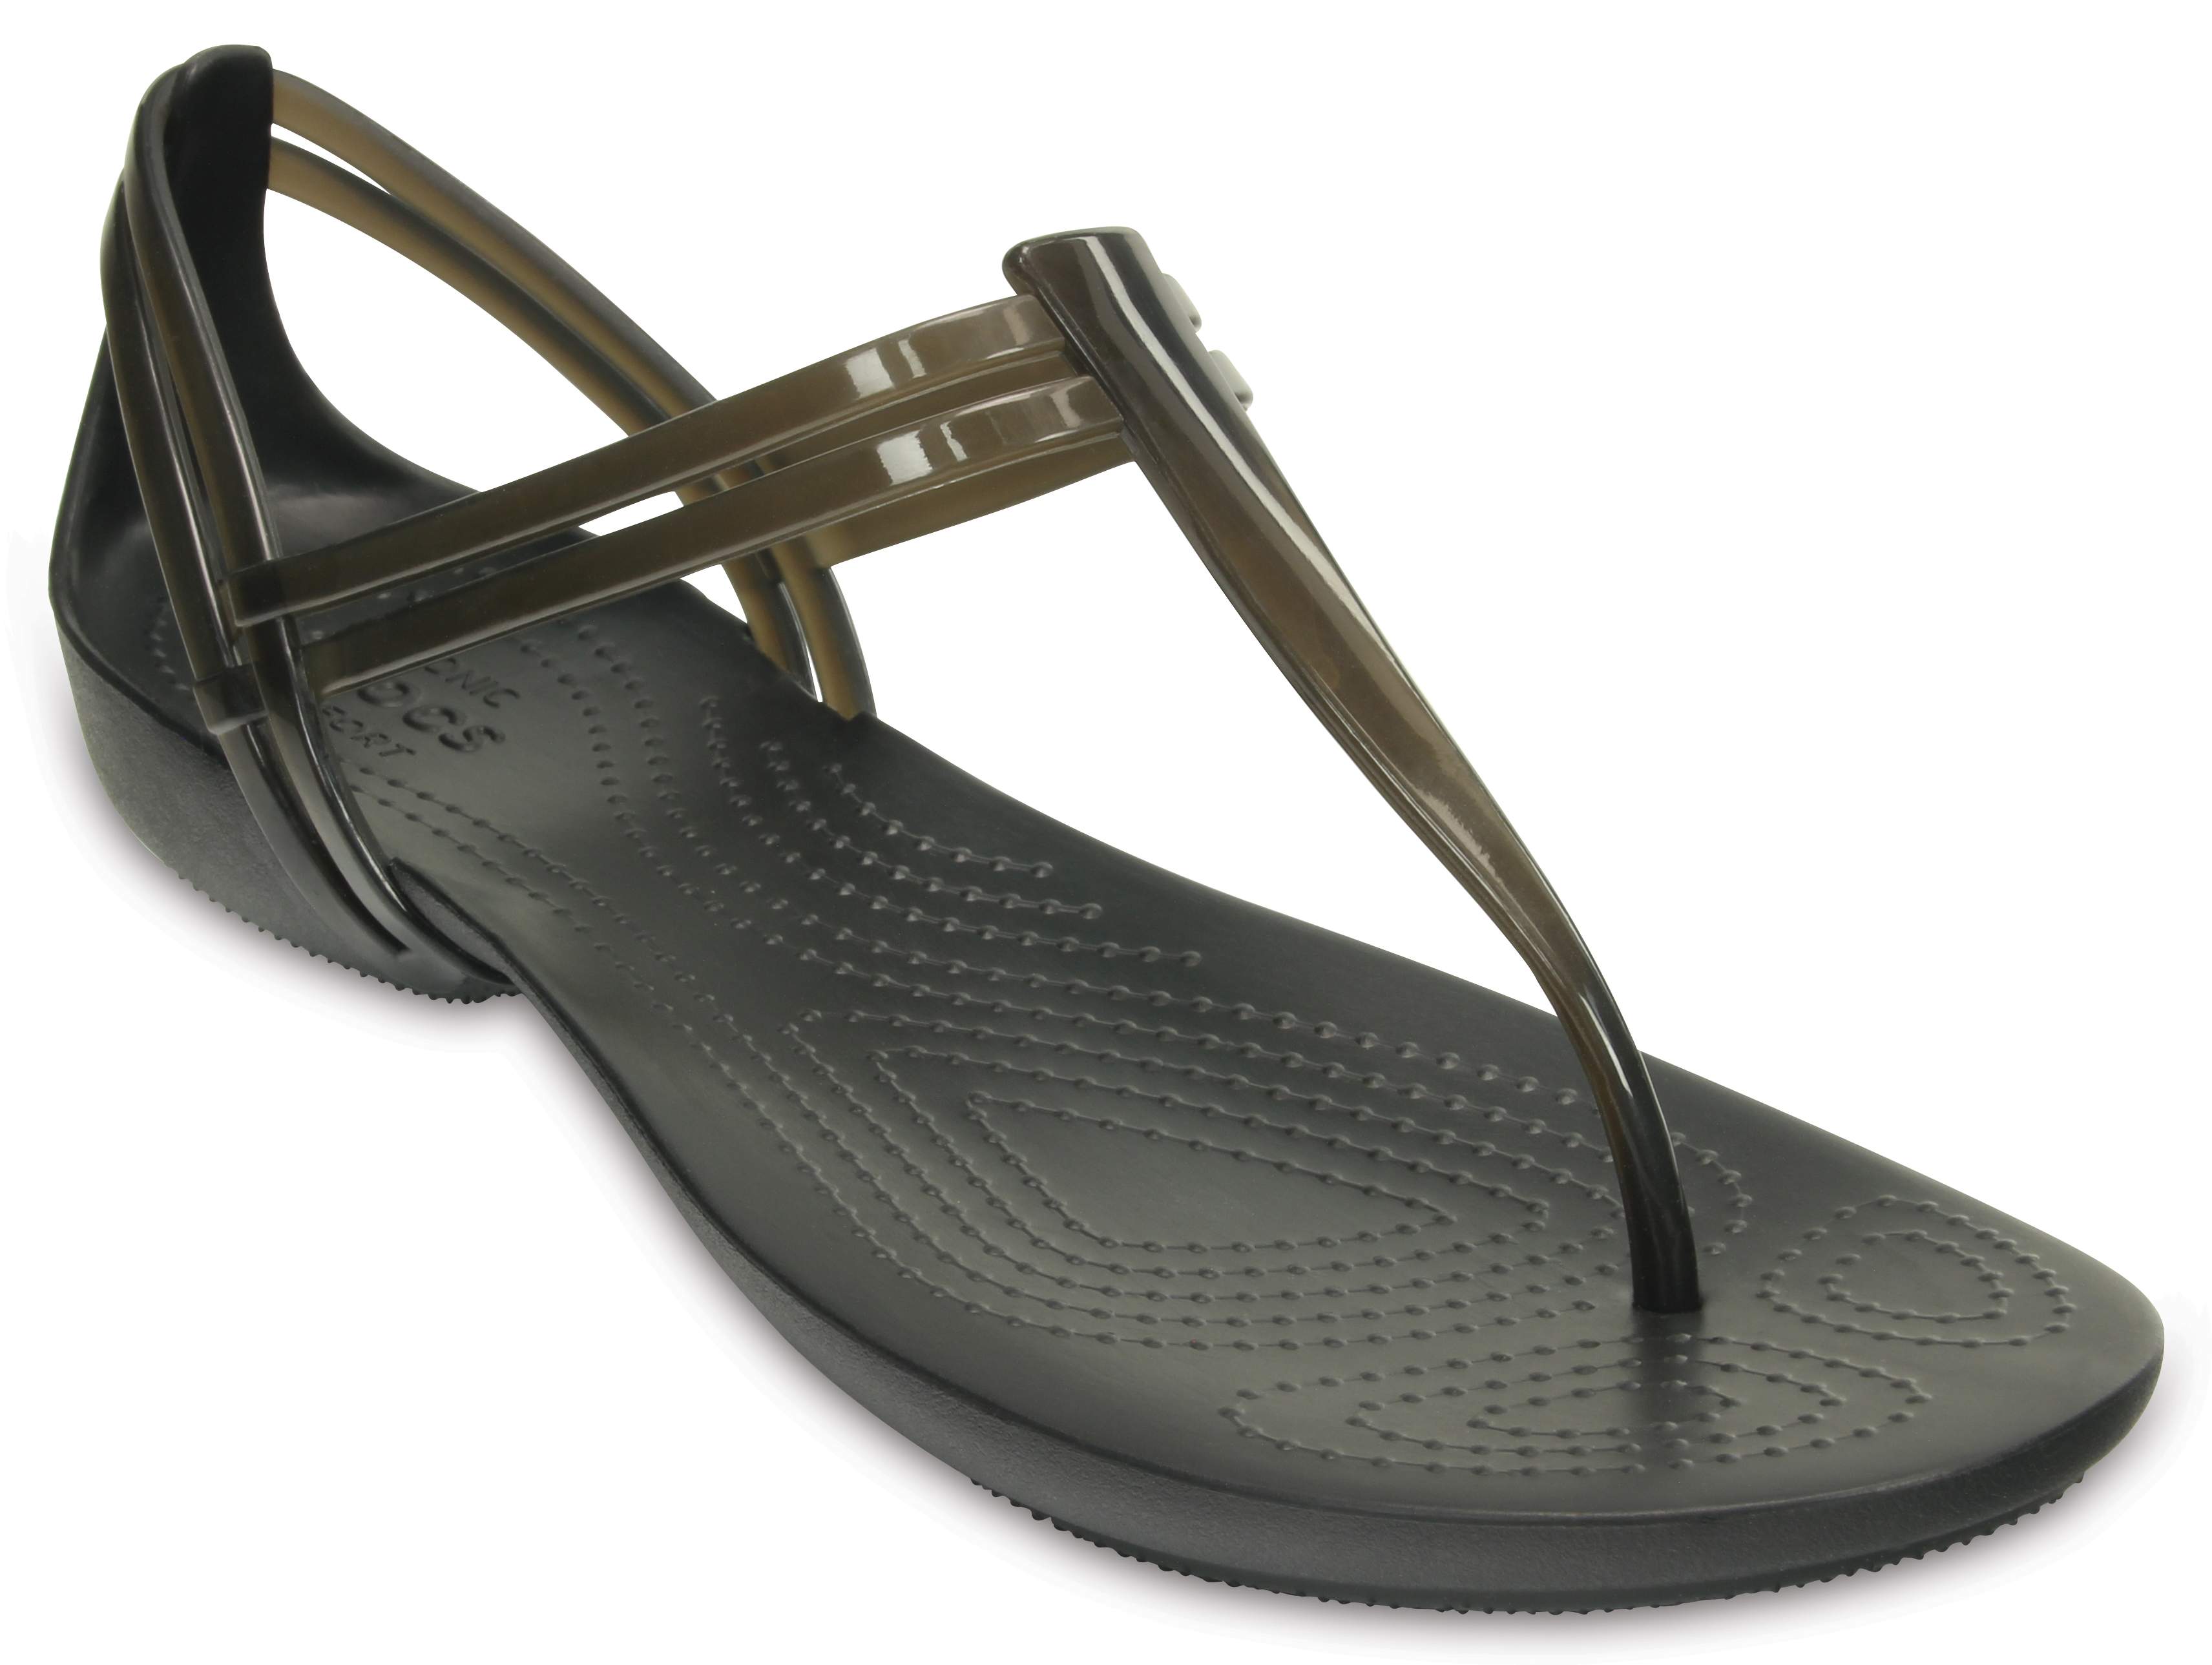 crocs isabella sandal review